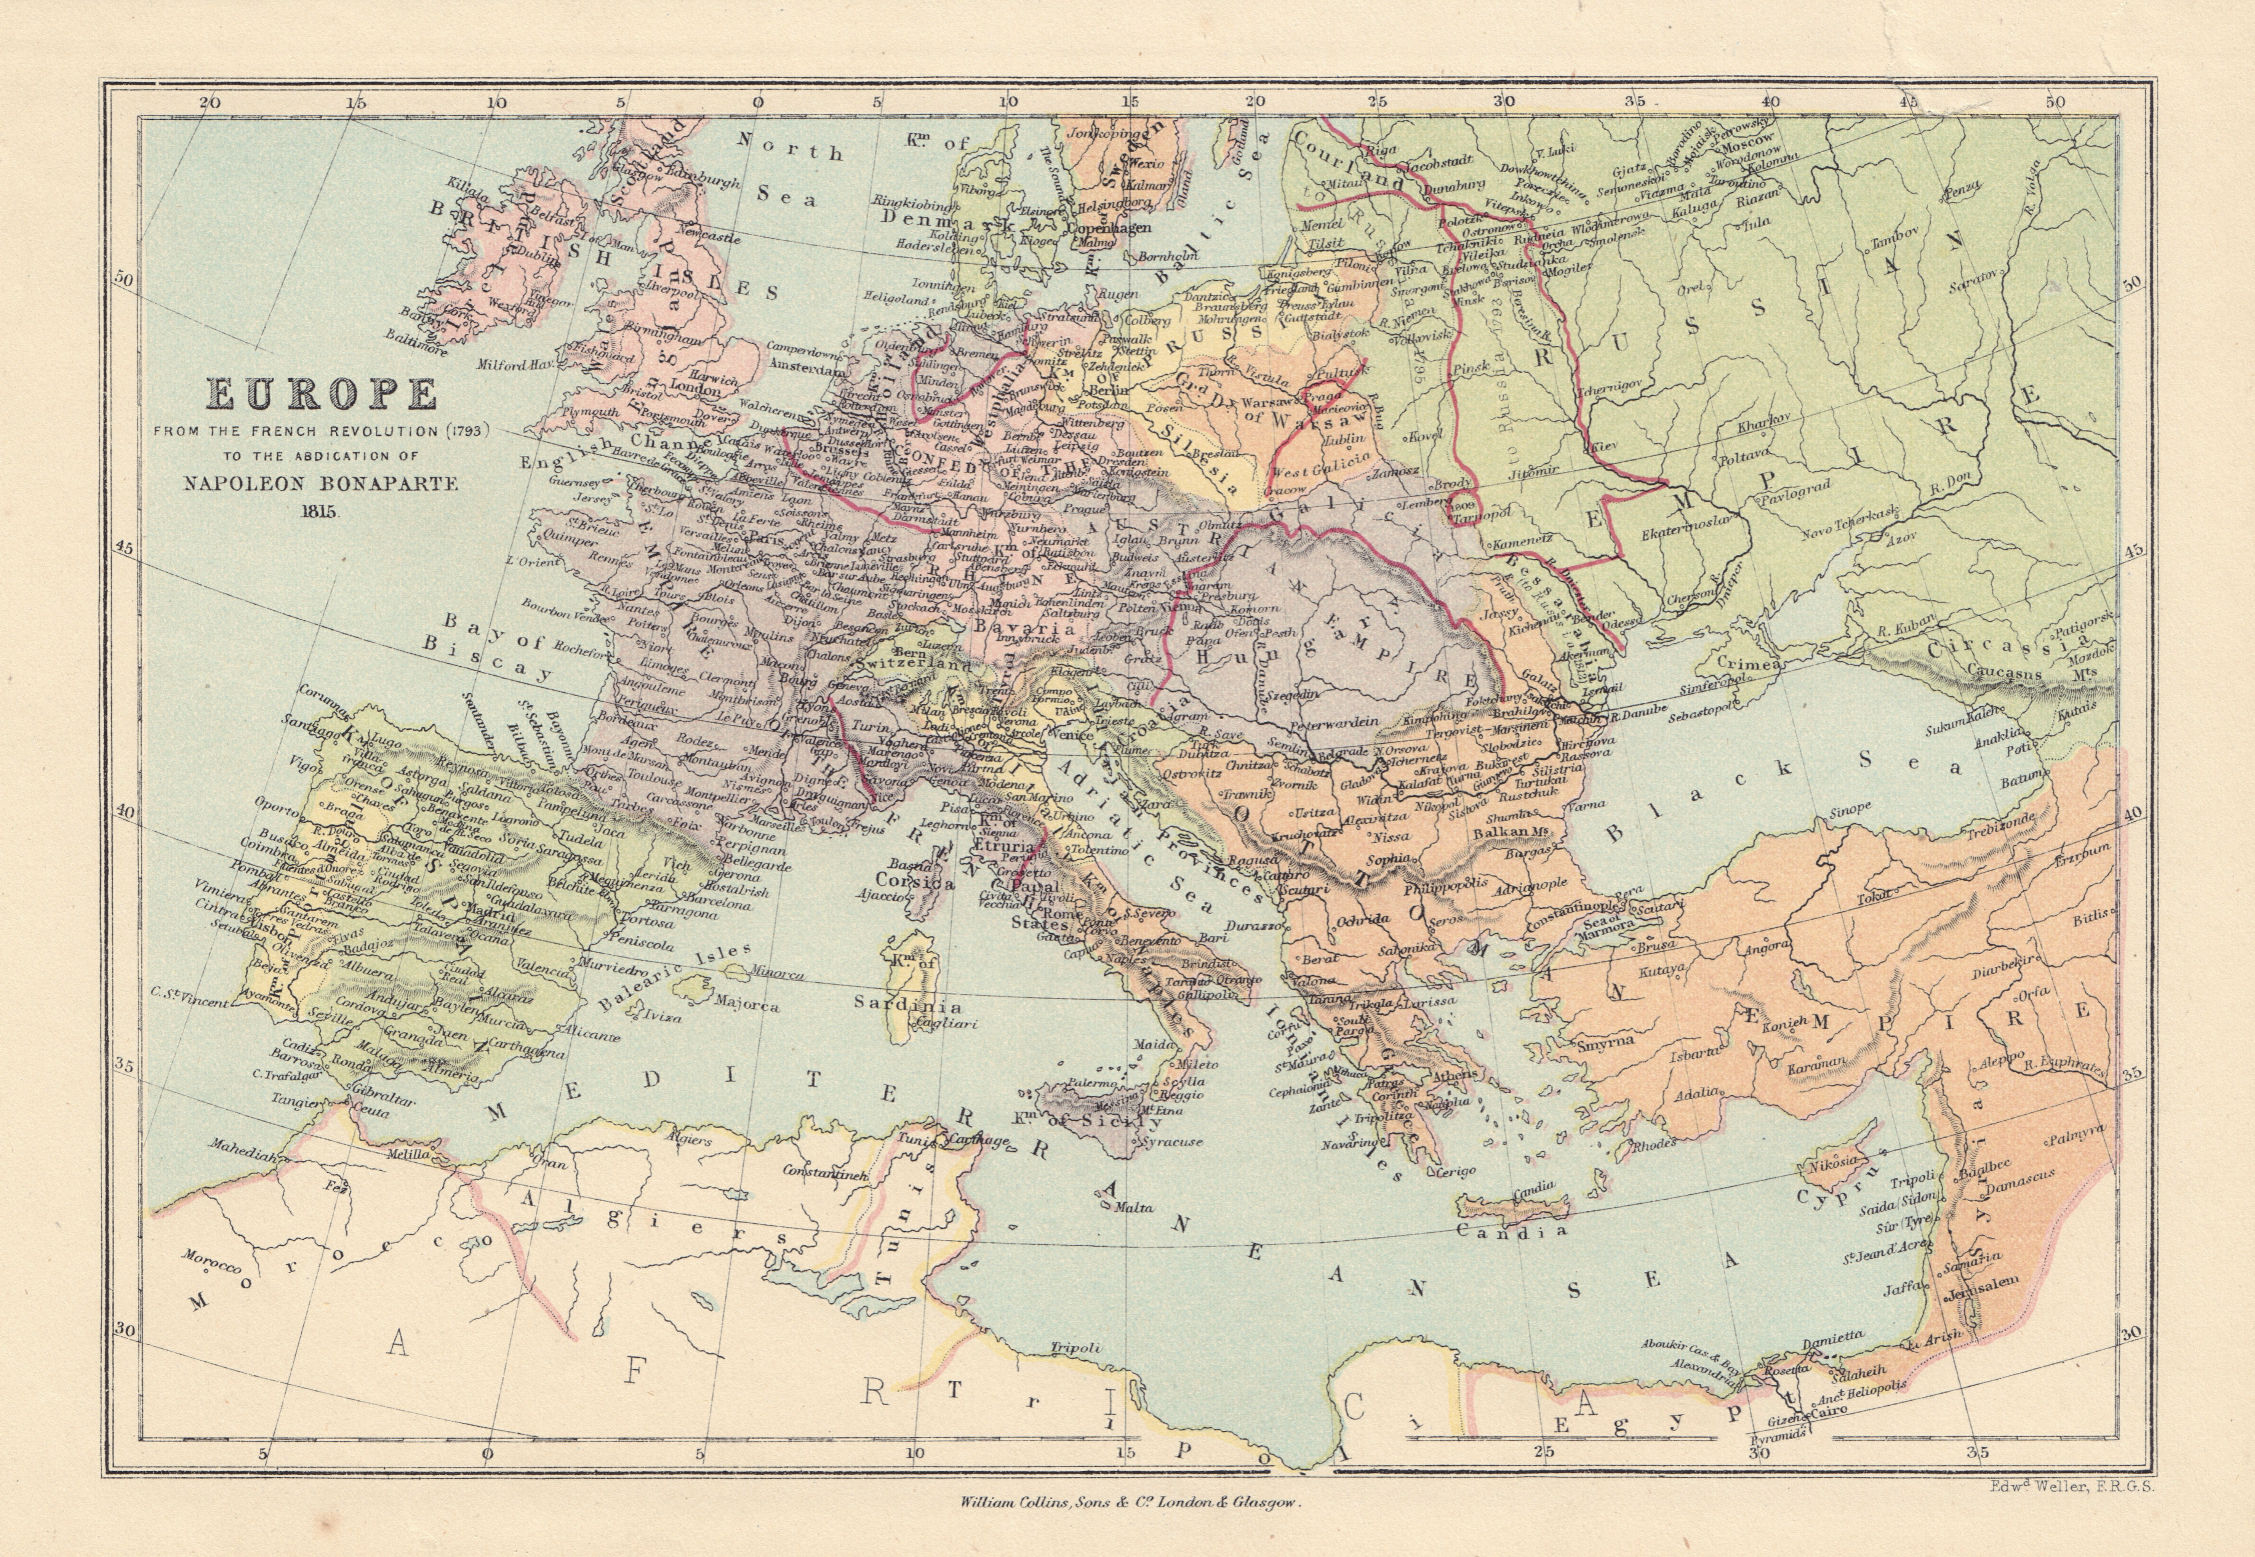 napoleonic wars map